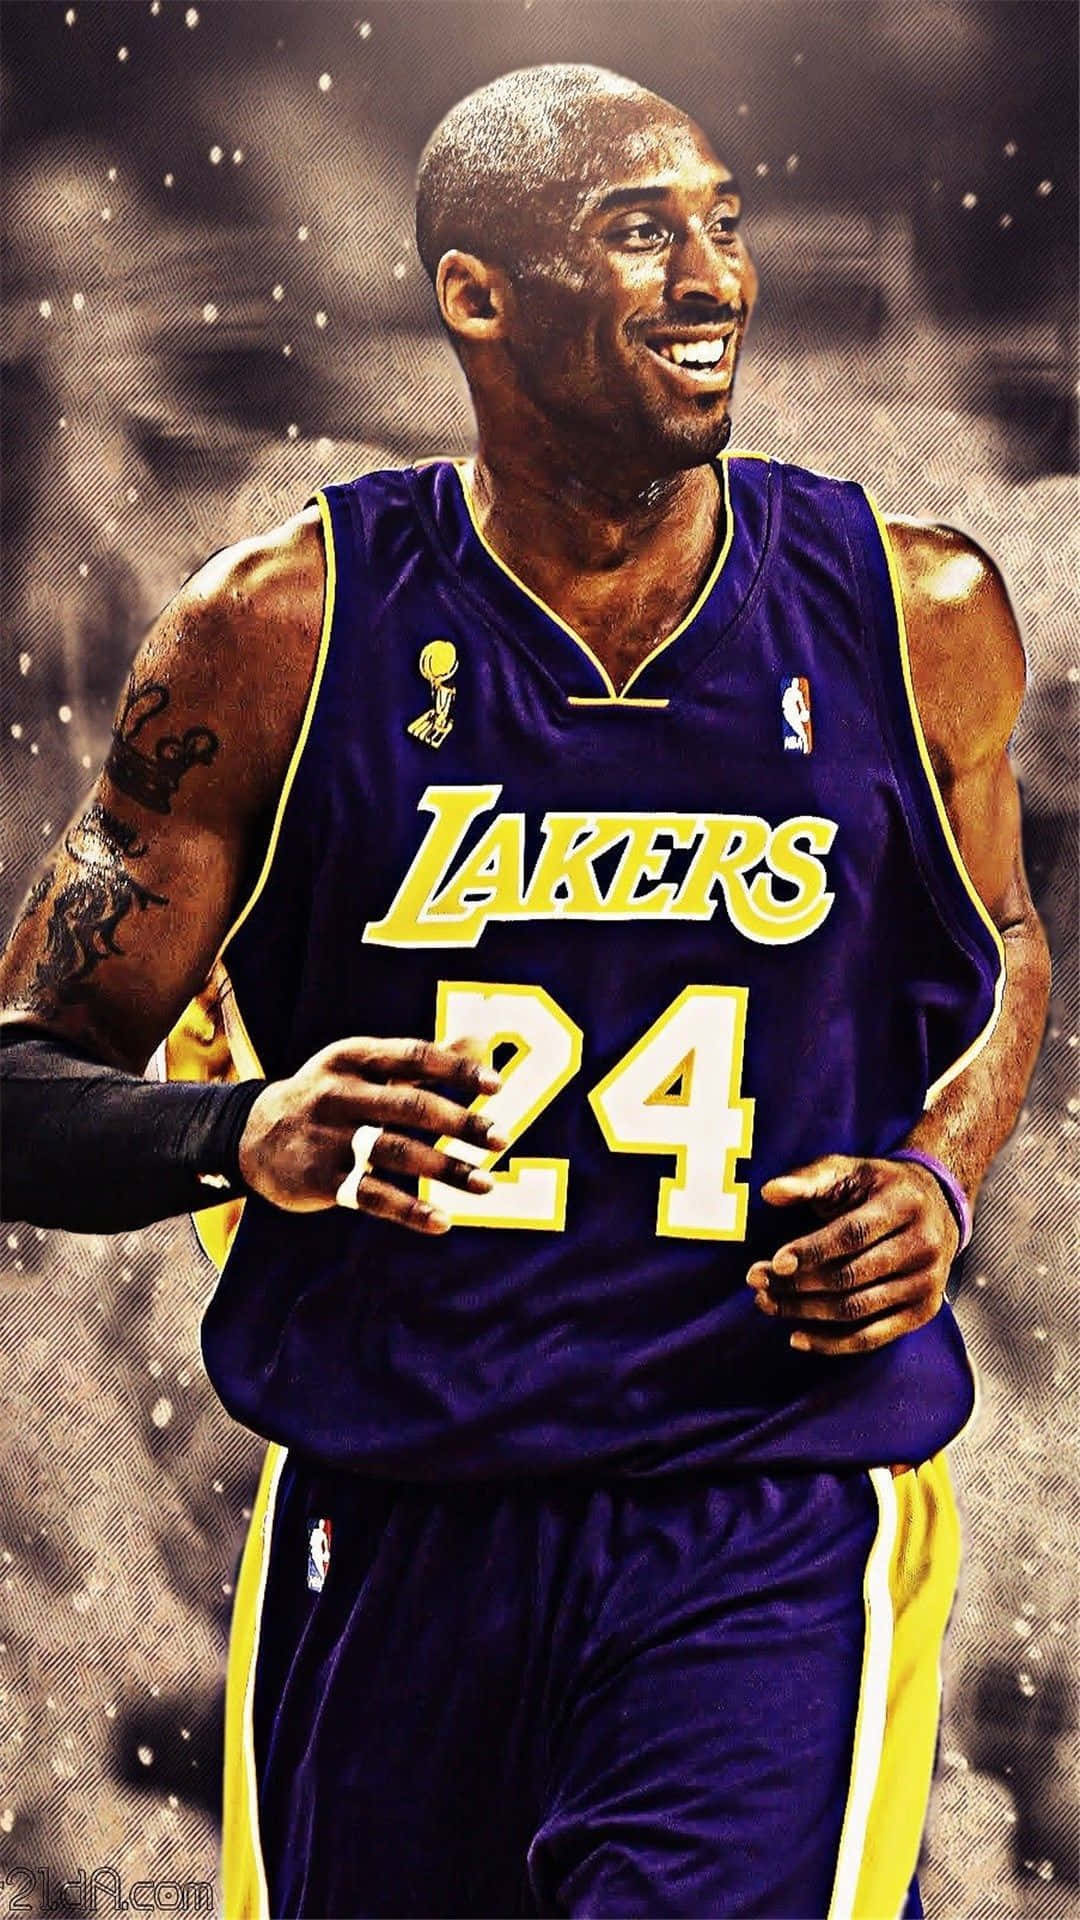 Kobe Bryant inspiring the world